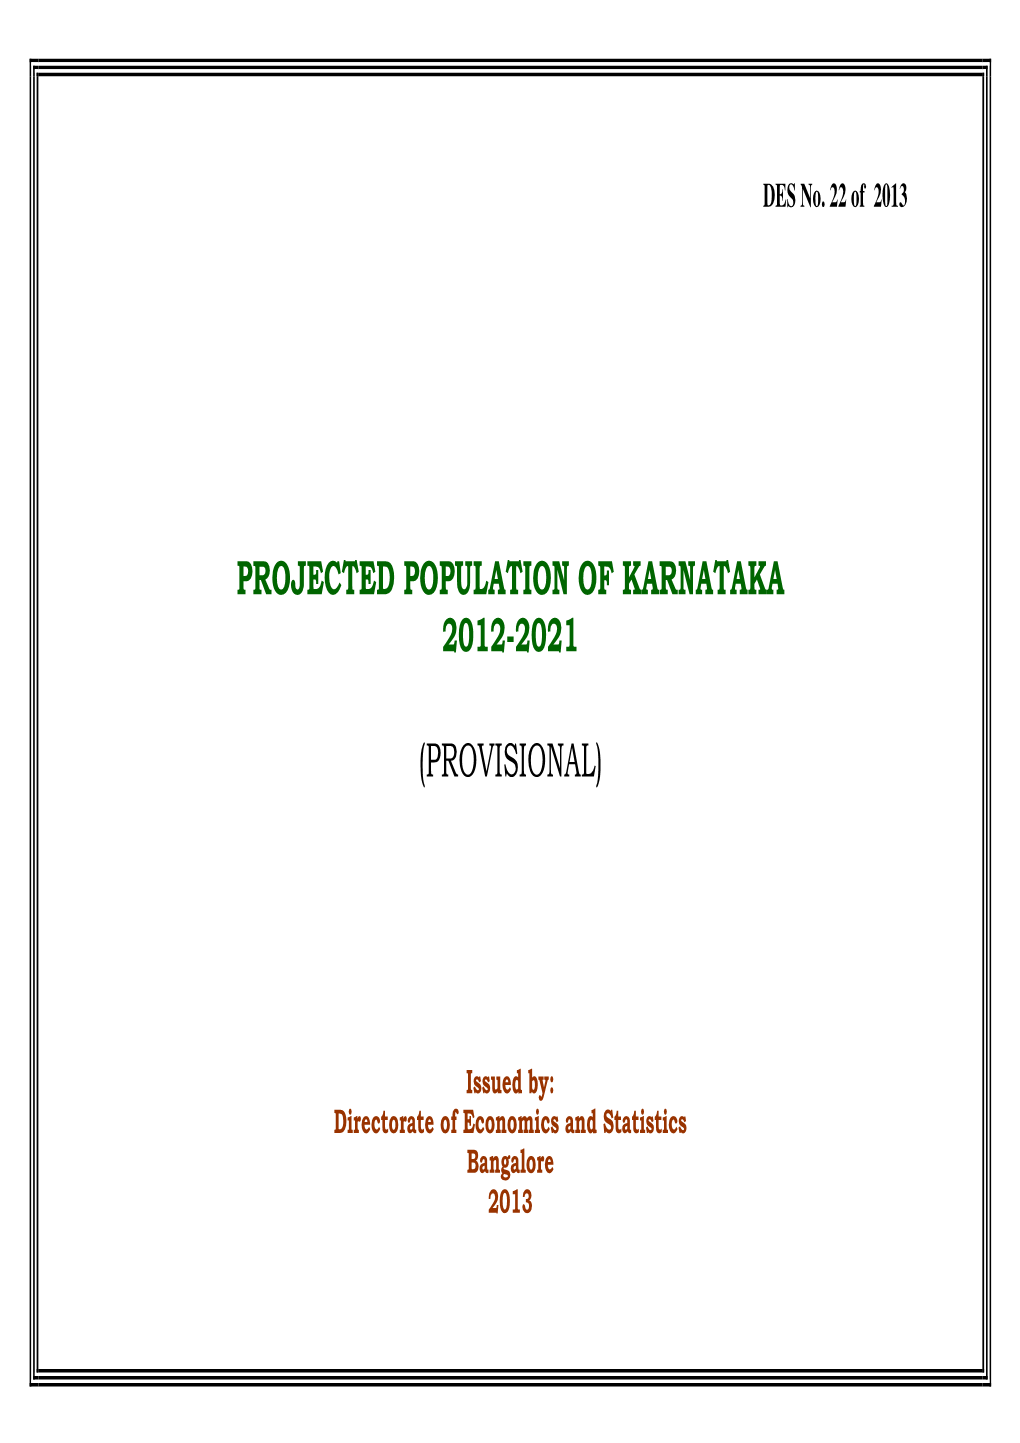 Projected Population of Karnataka 2012-2021